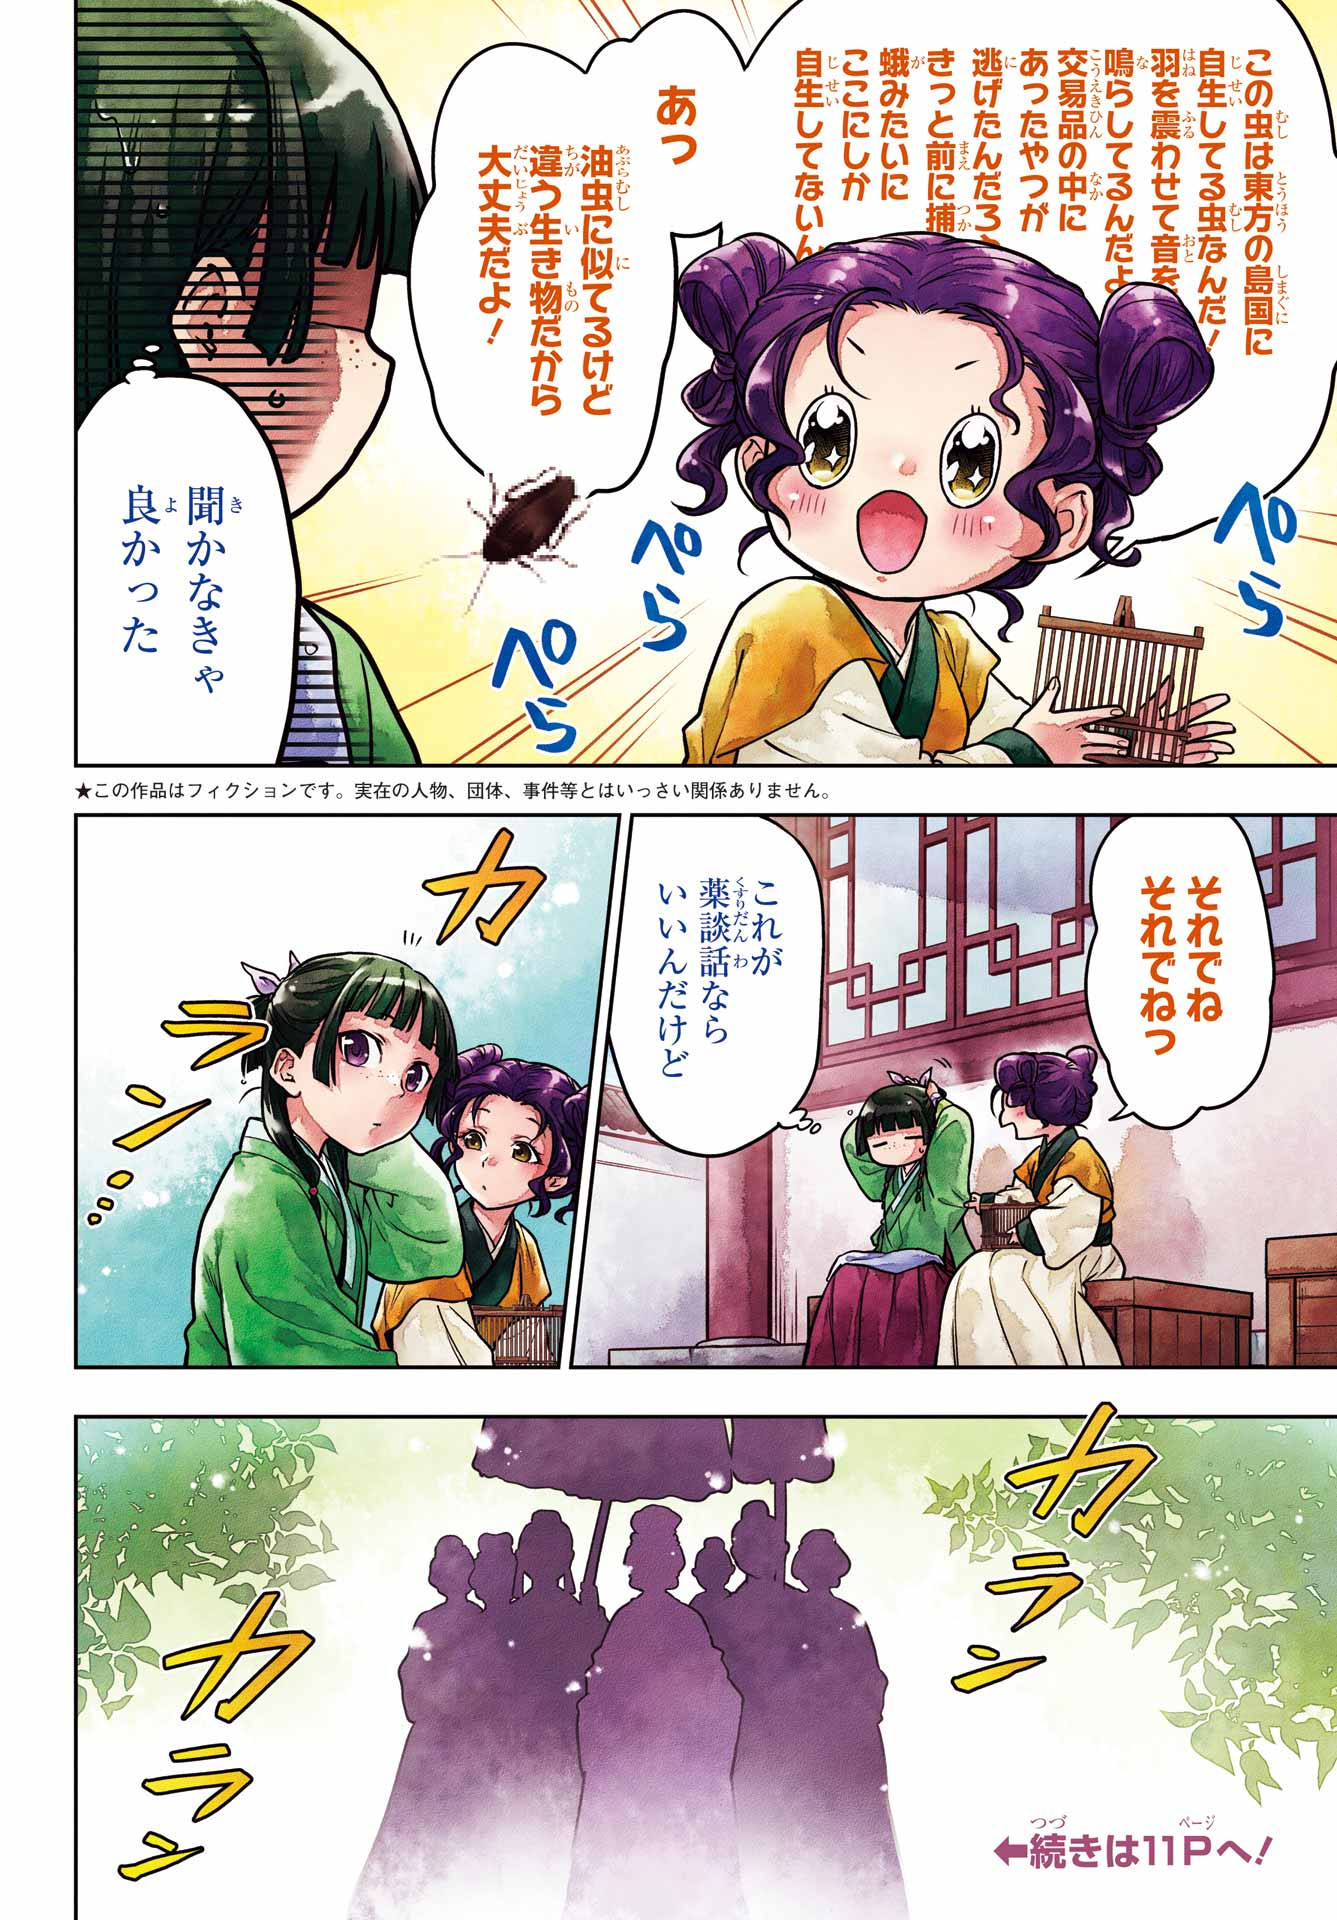 Kusuriya no Hitorigoto - Chapter 55-2 - Page 4